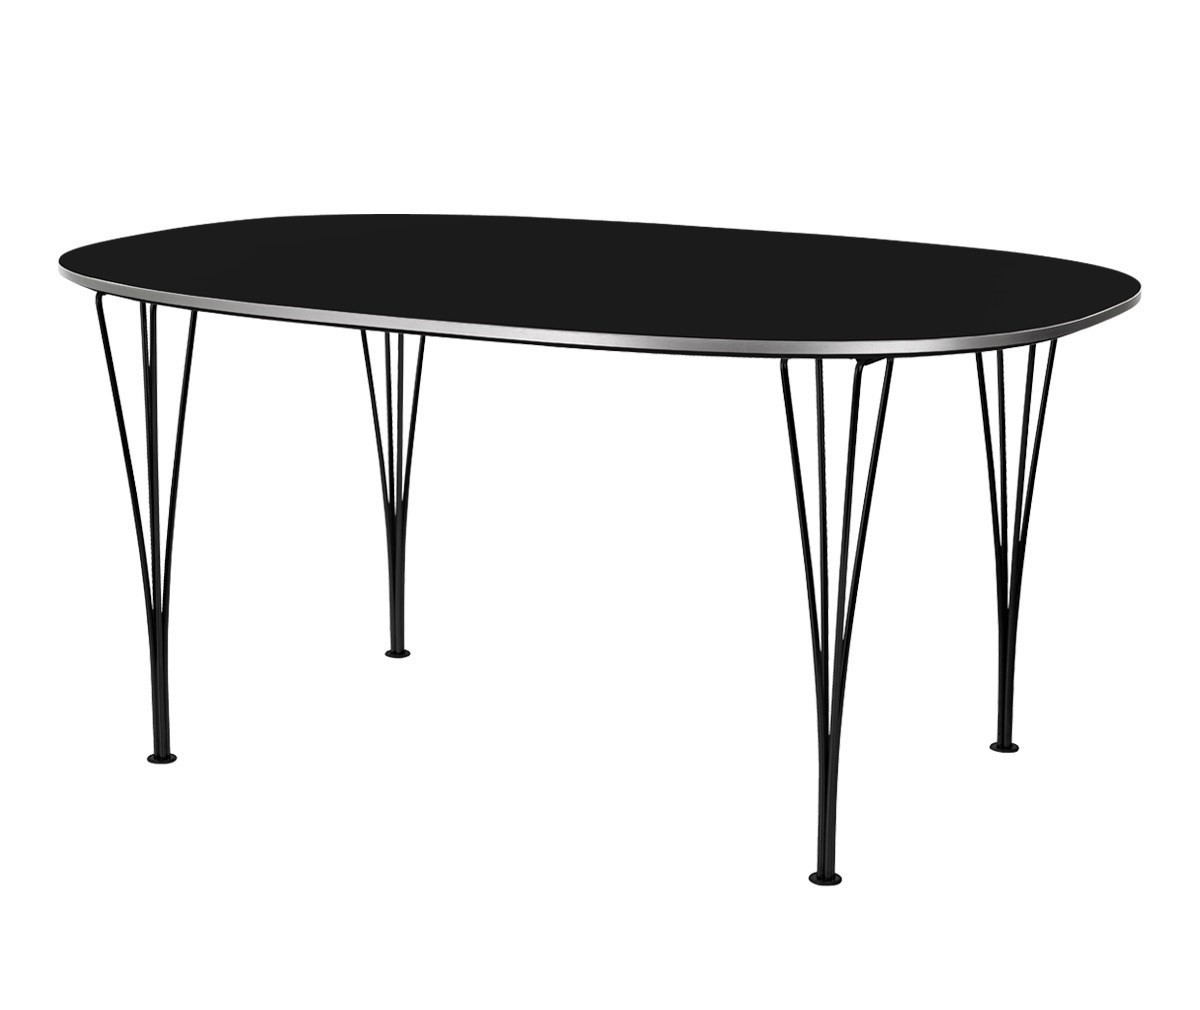 Fritz Hansen Dining Table B613, “Superellipse” Black/Black, 120 x 180 cm